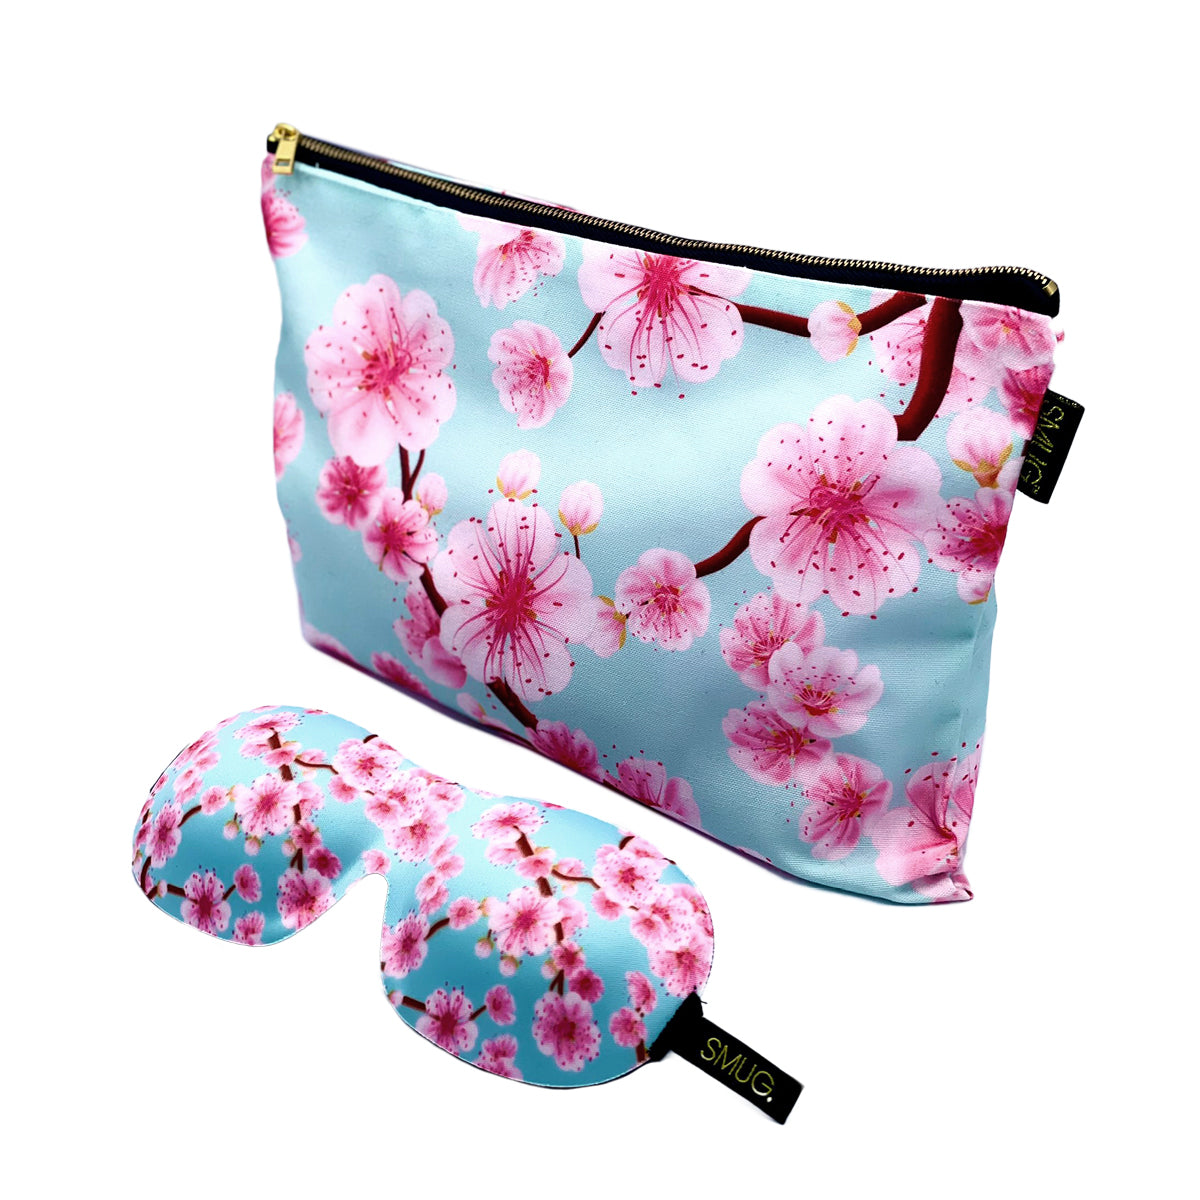 Contoured Sleep Mask & Accessories Bag Set - Cherry Blossom Print